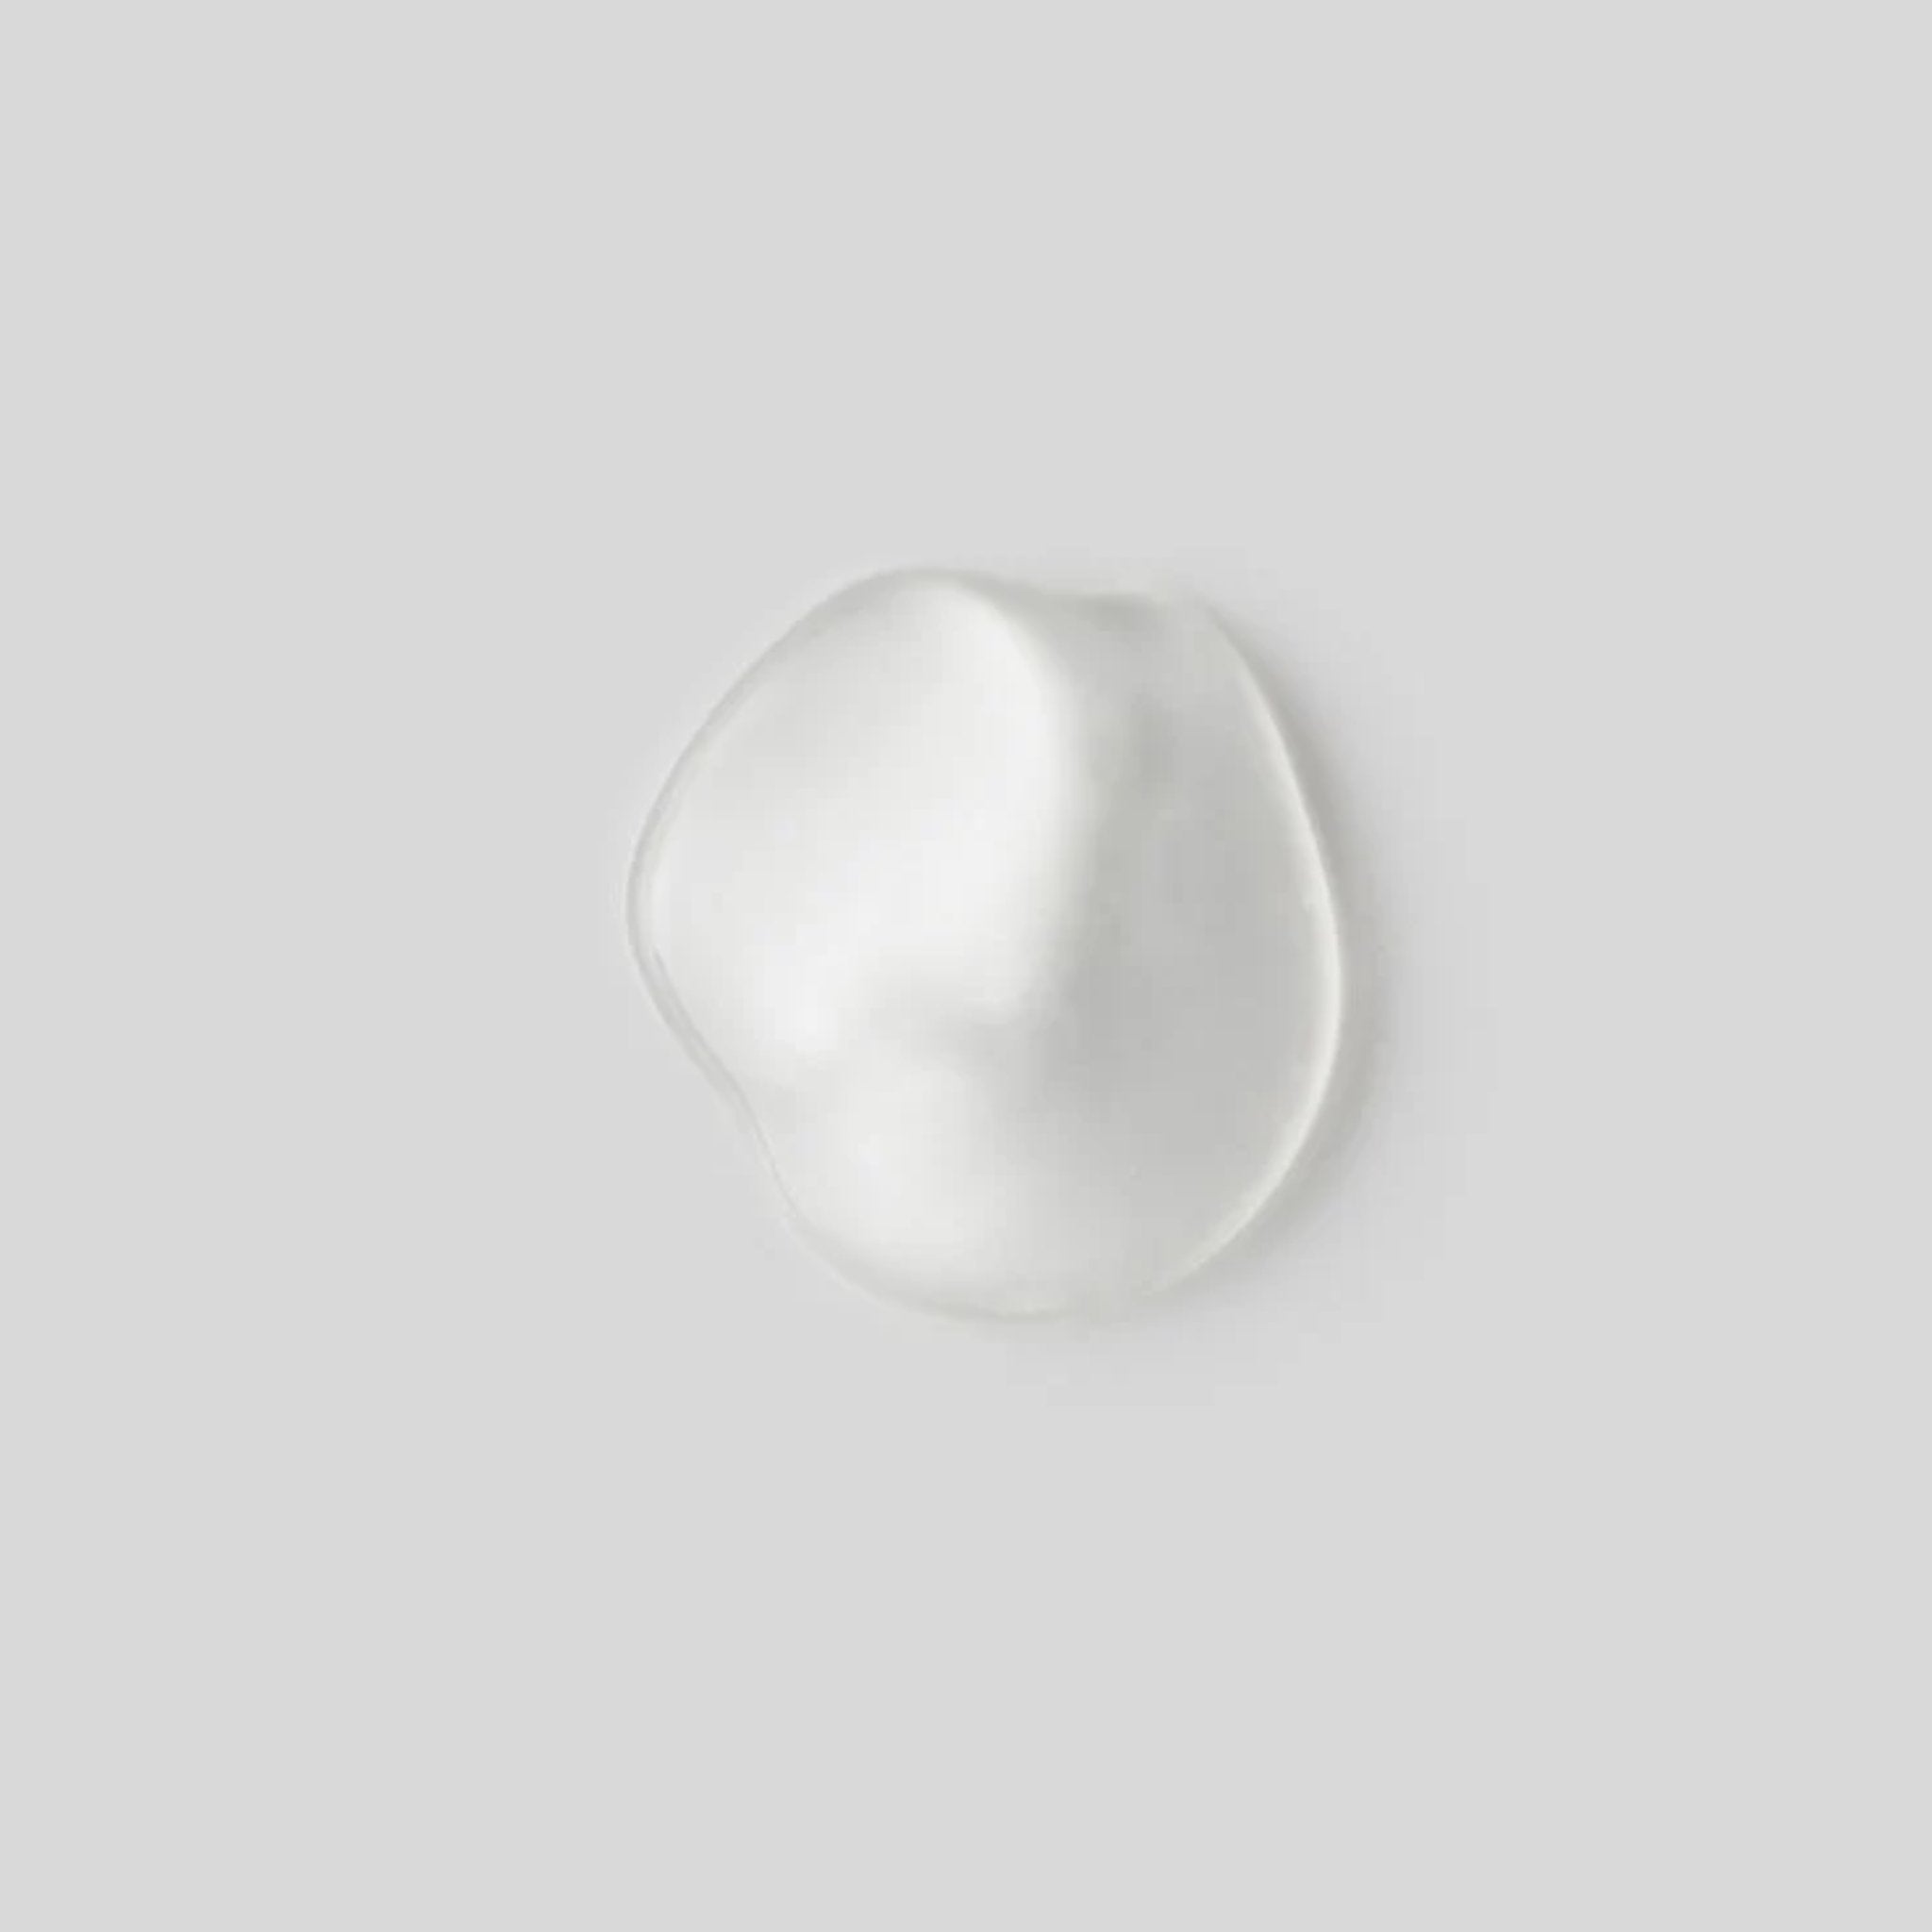 Sachajuan. Shampoing Soin Couleur - 1000 ml - Concept C. Shop